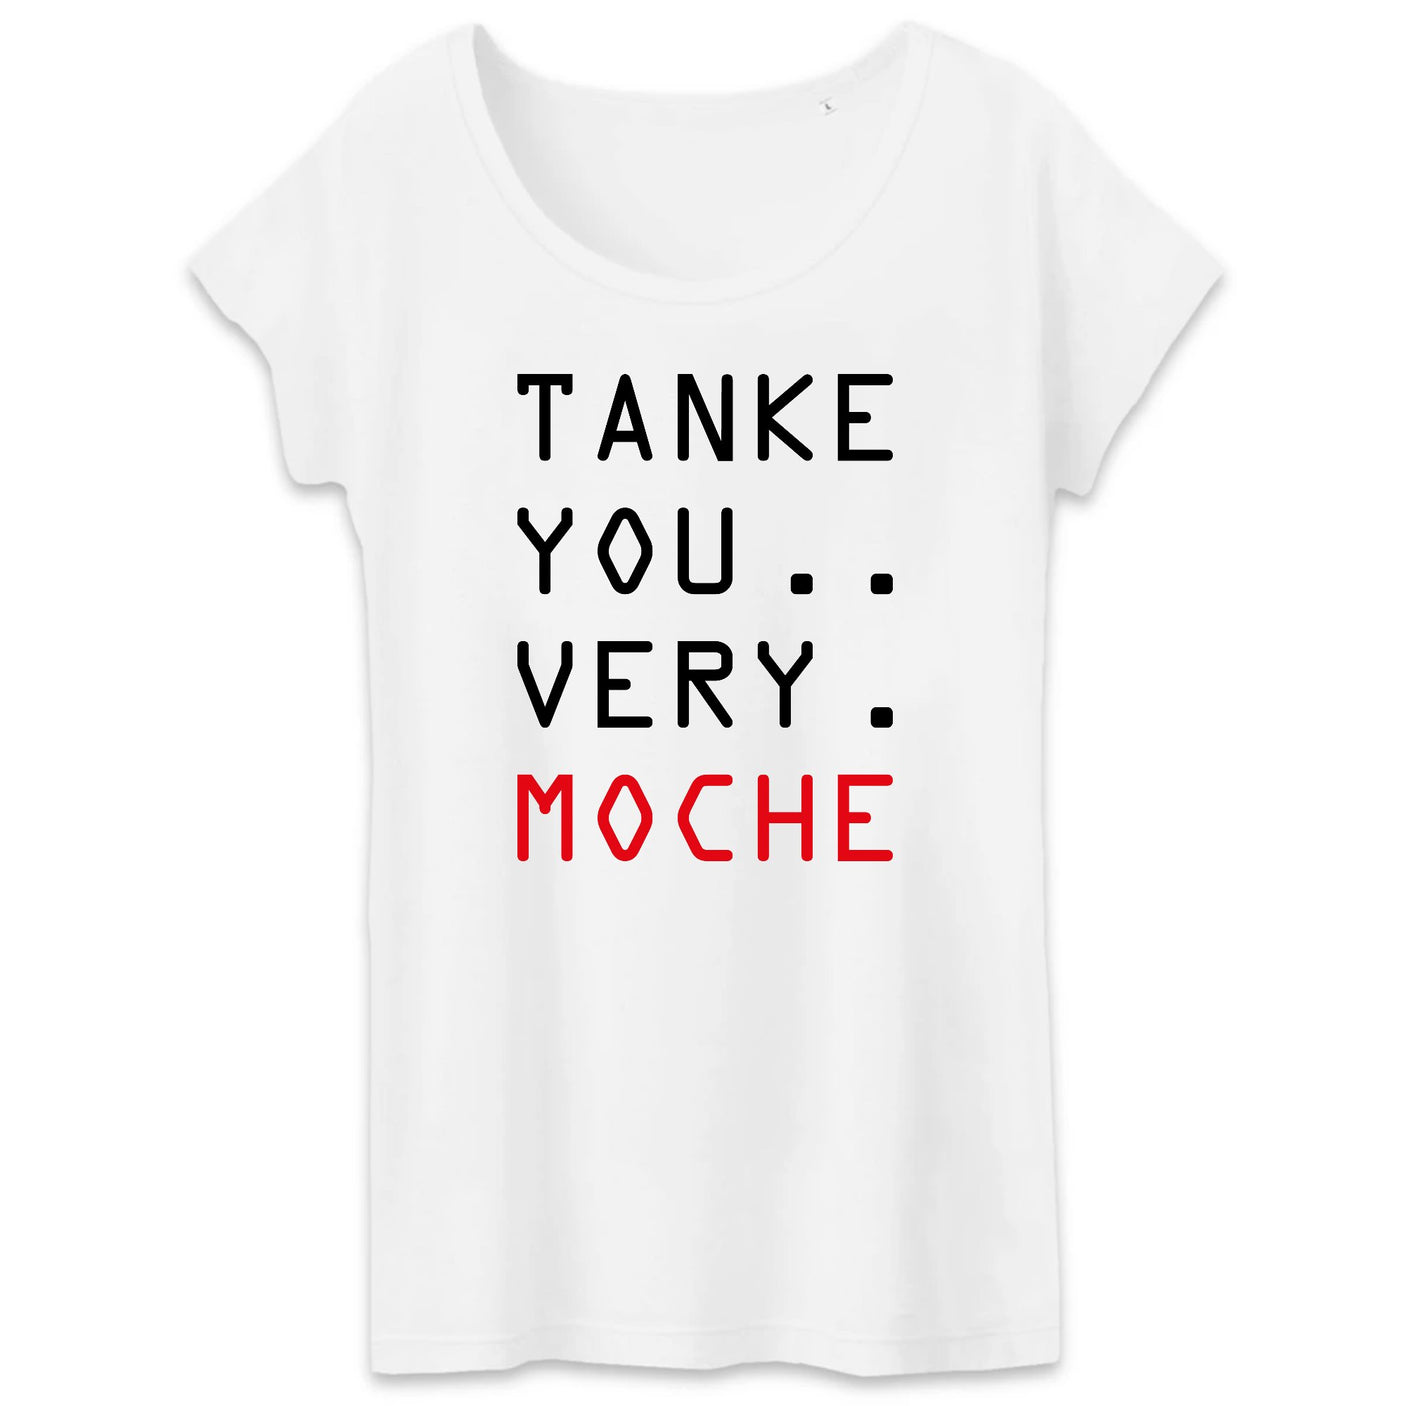 T-Shirt Femme Tanke you very moche 